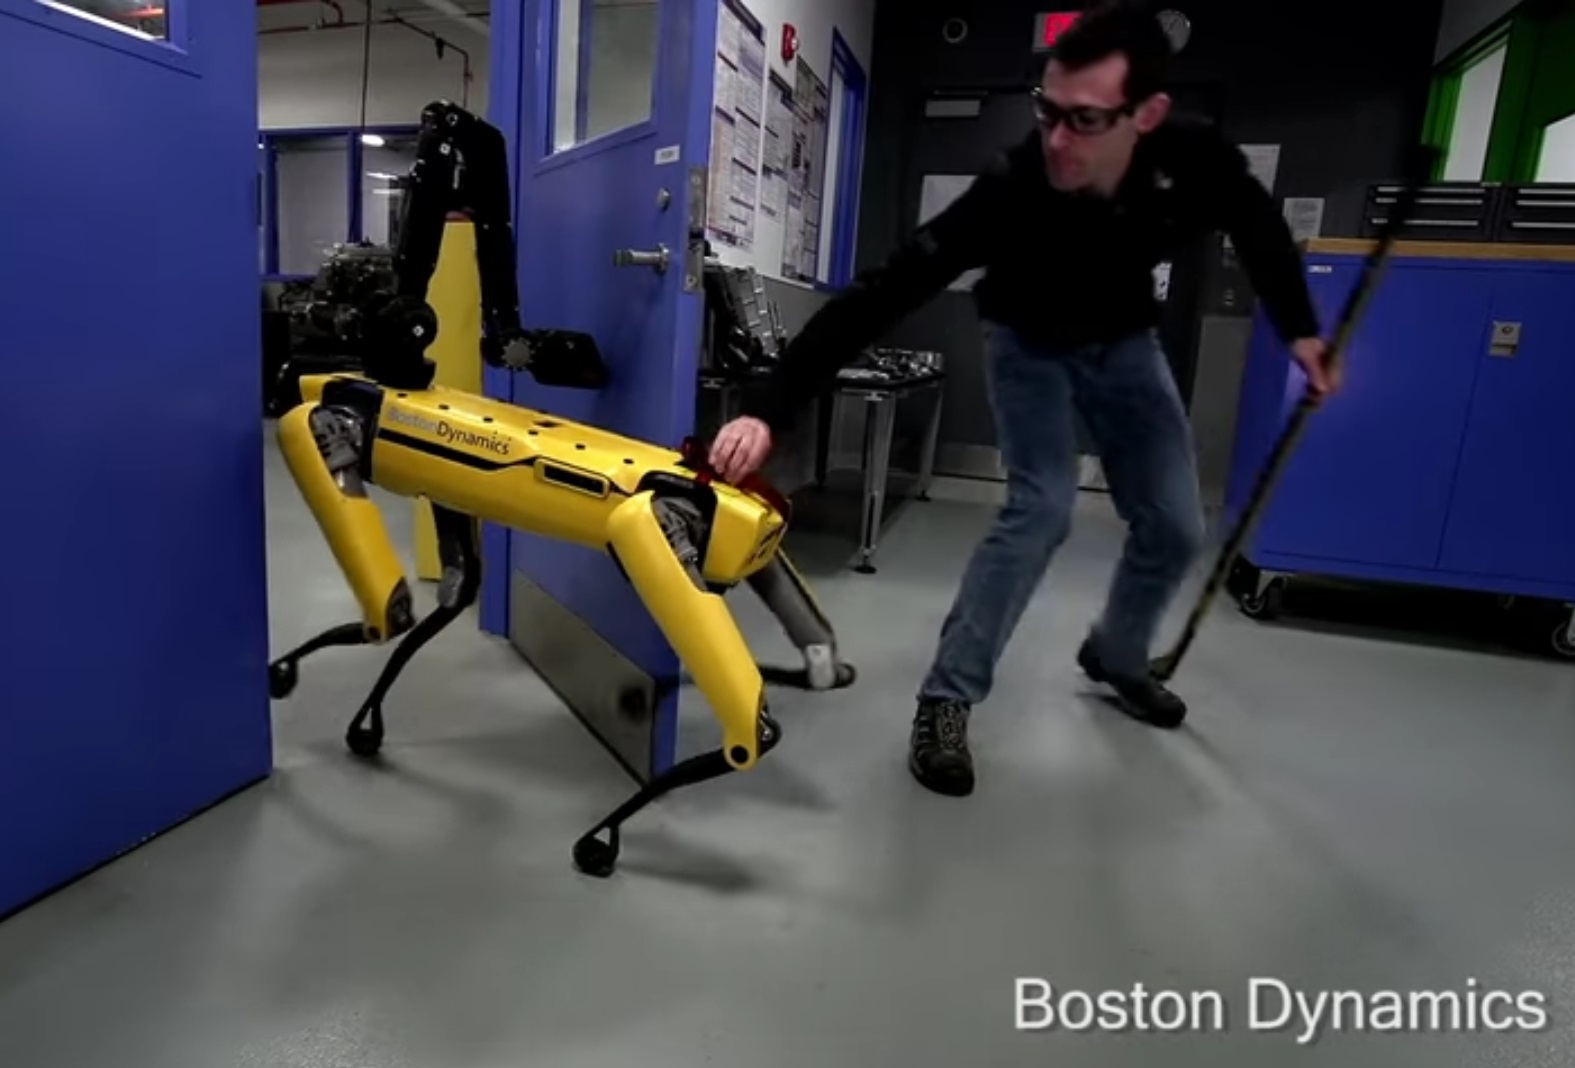 Humans sow seeds of destruction by poor robot just trying to walk through a door | TechCrunch